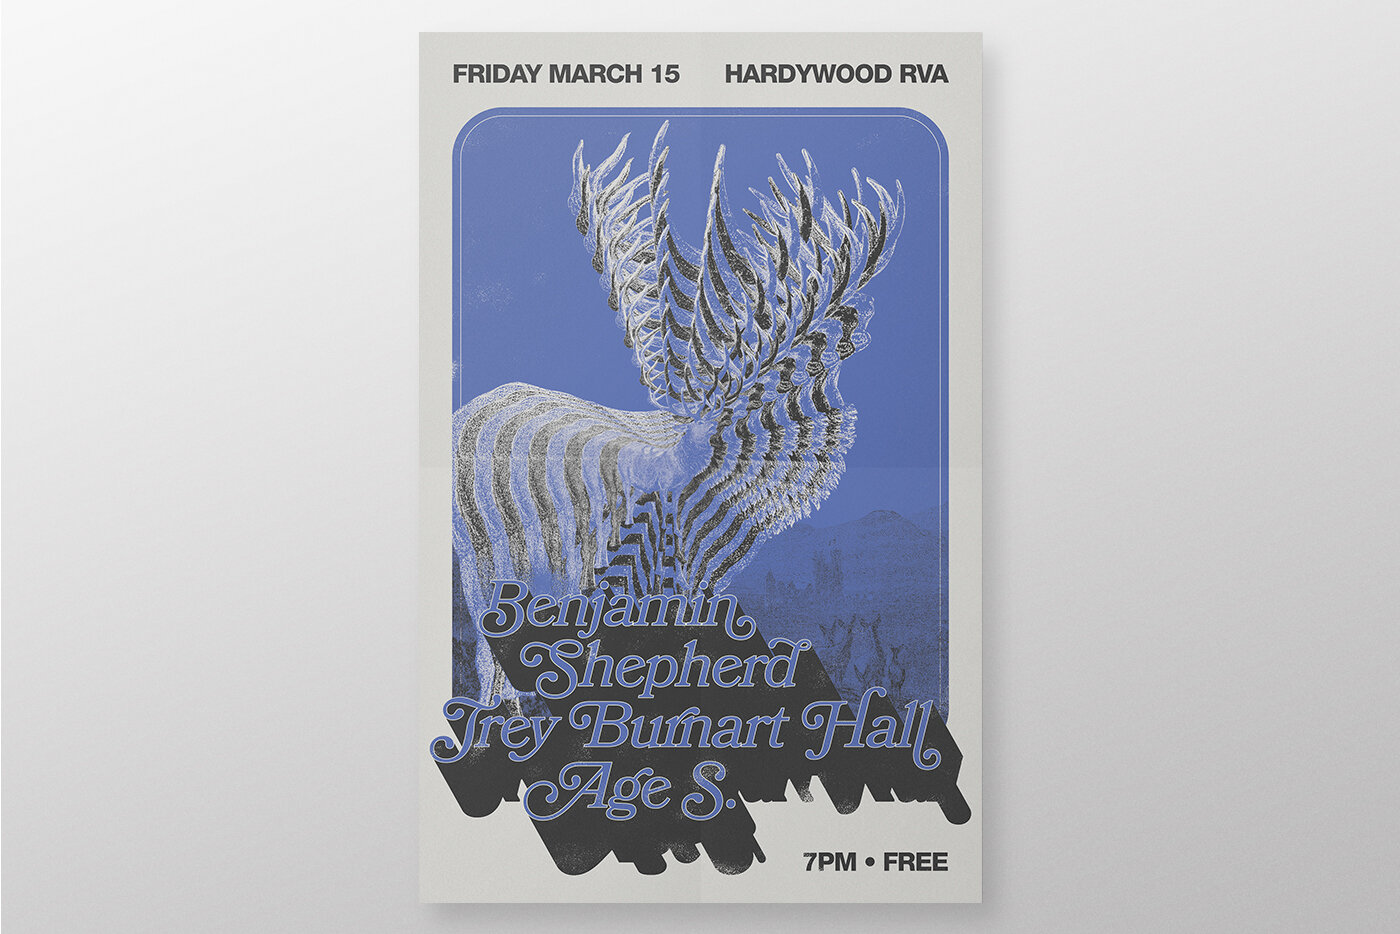 Hardywood Concert Poster Design